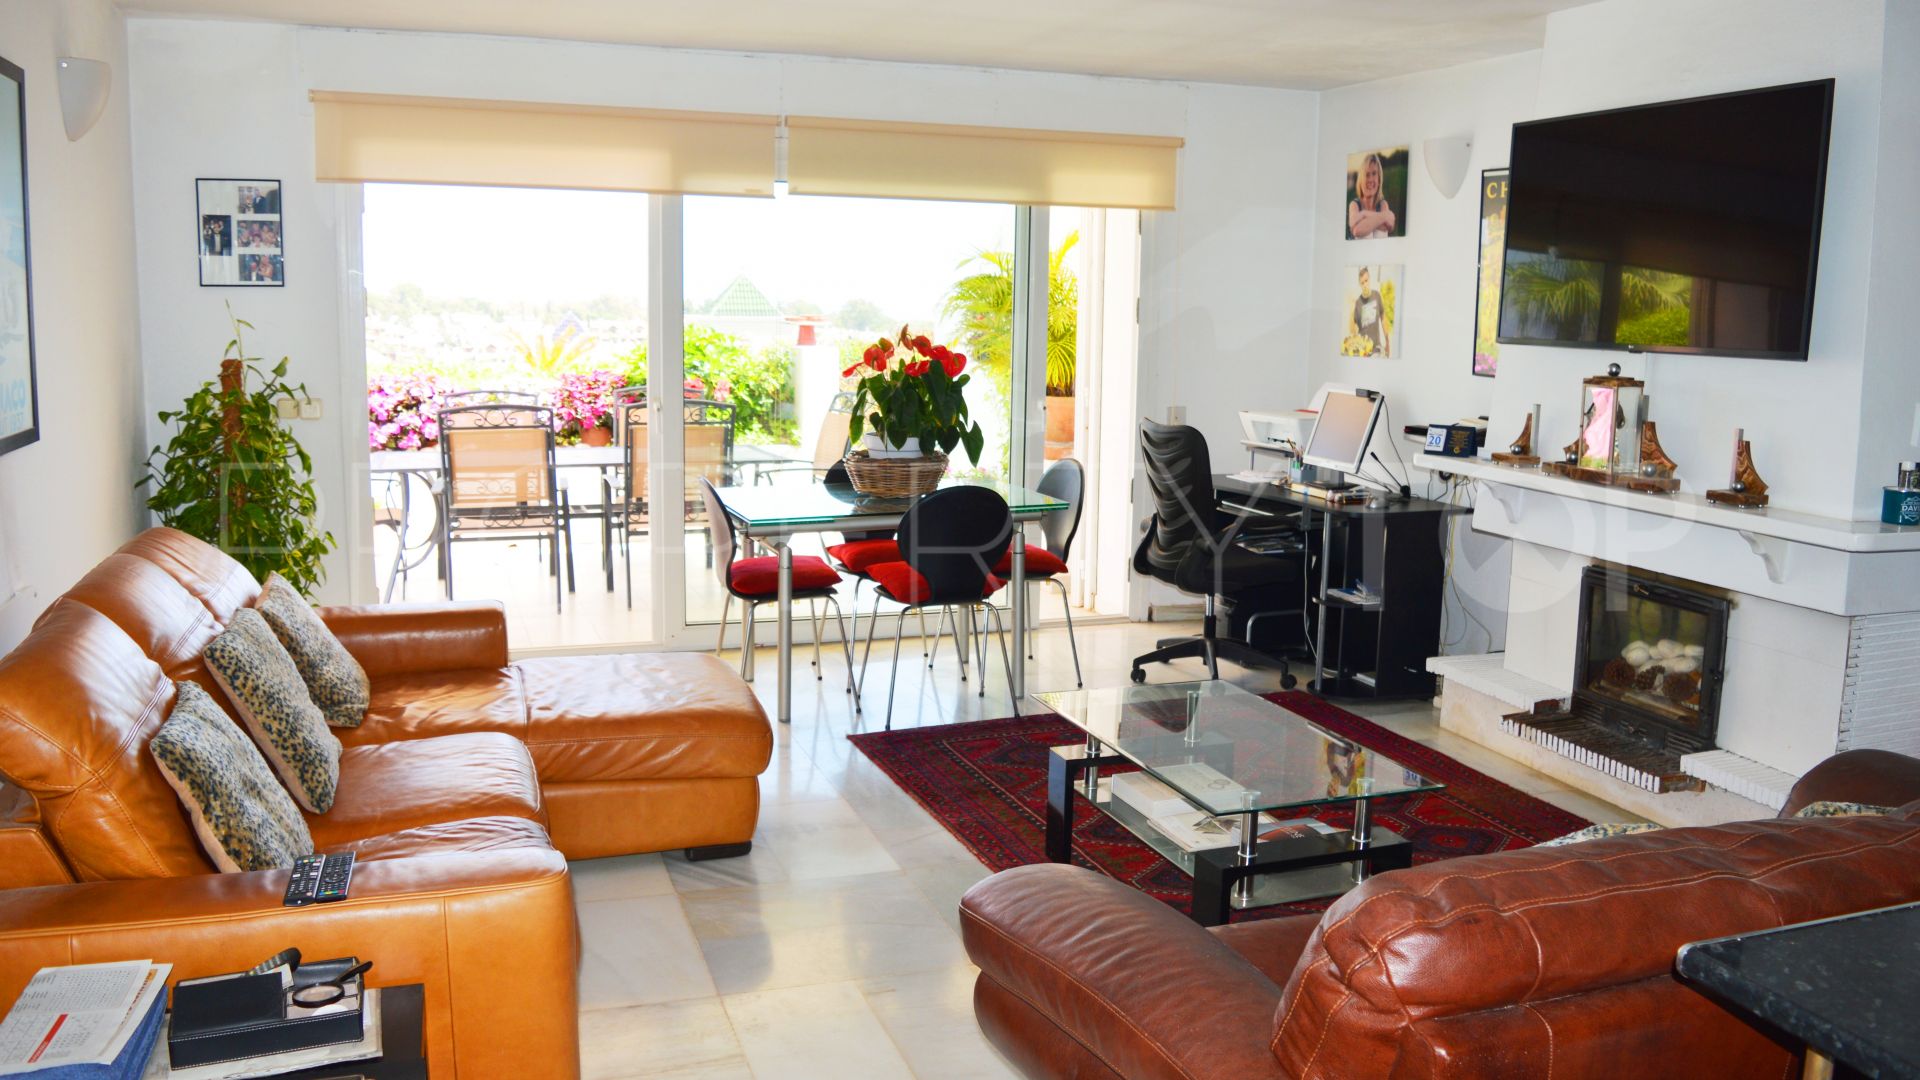 For sale ground floor duplex with 2 bedrooms in Paraiso Barronal